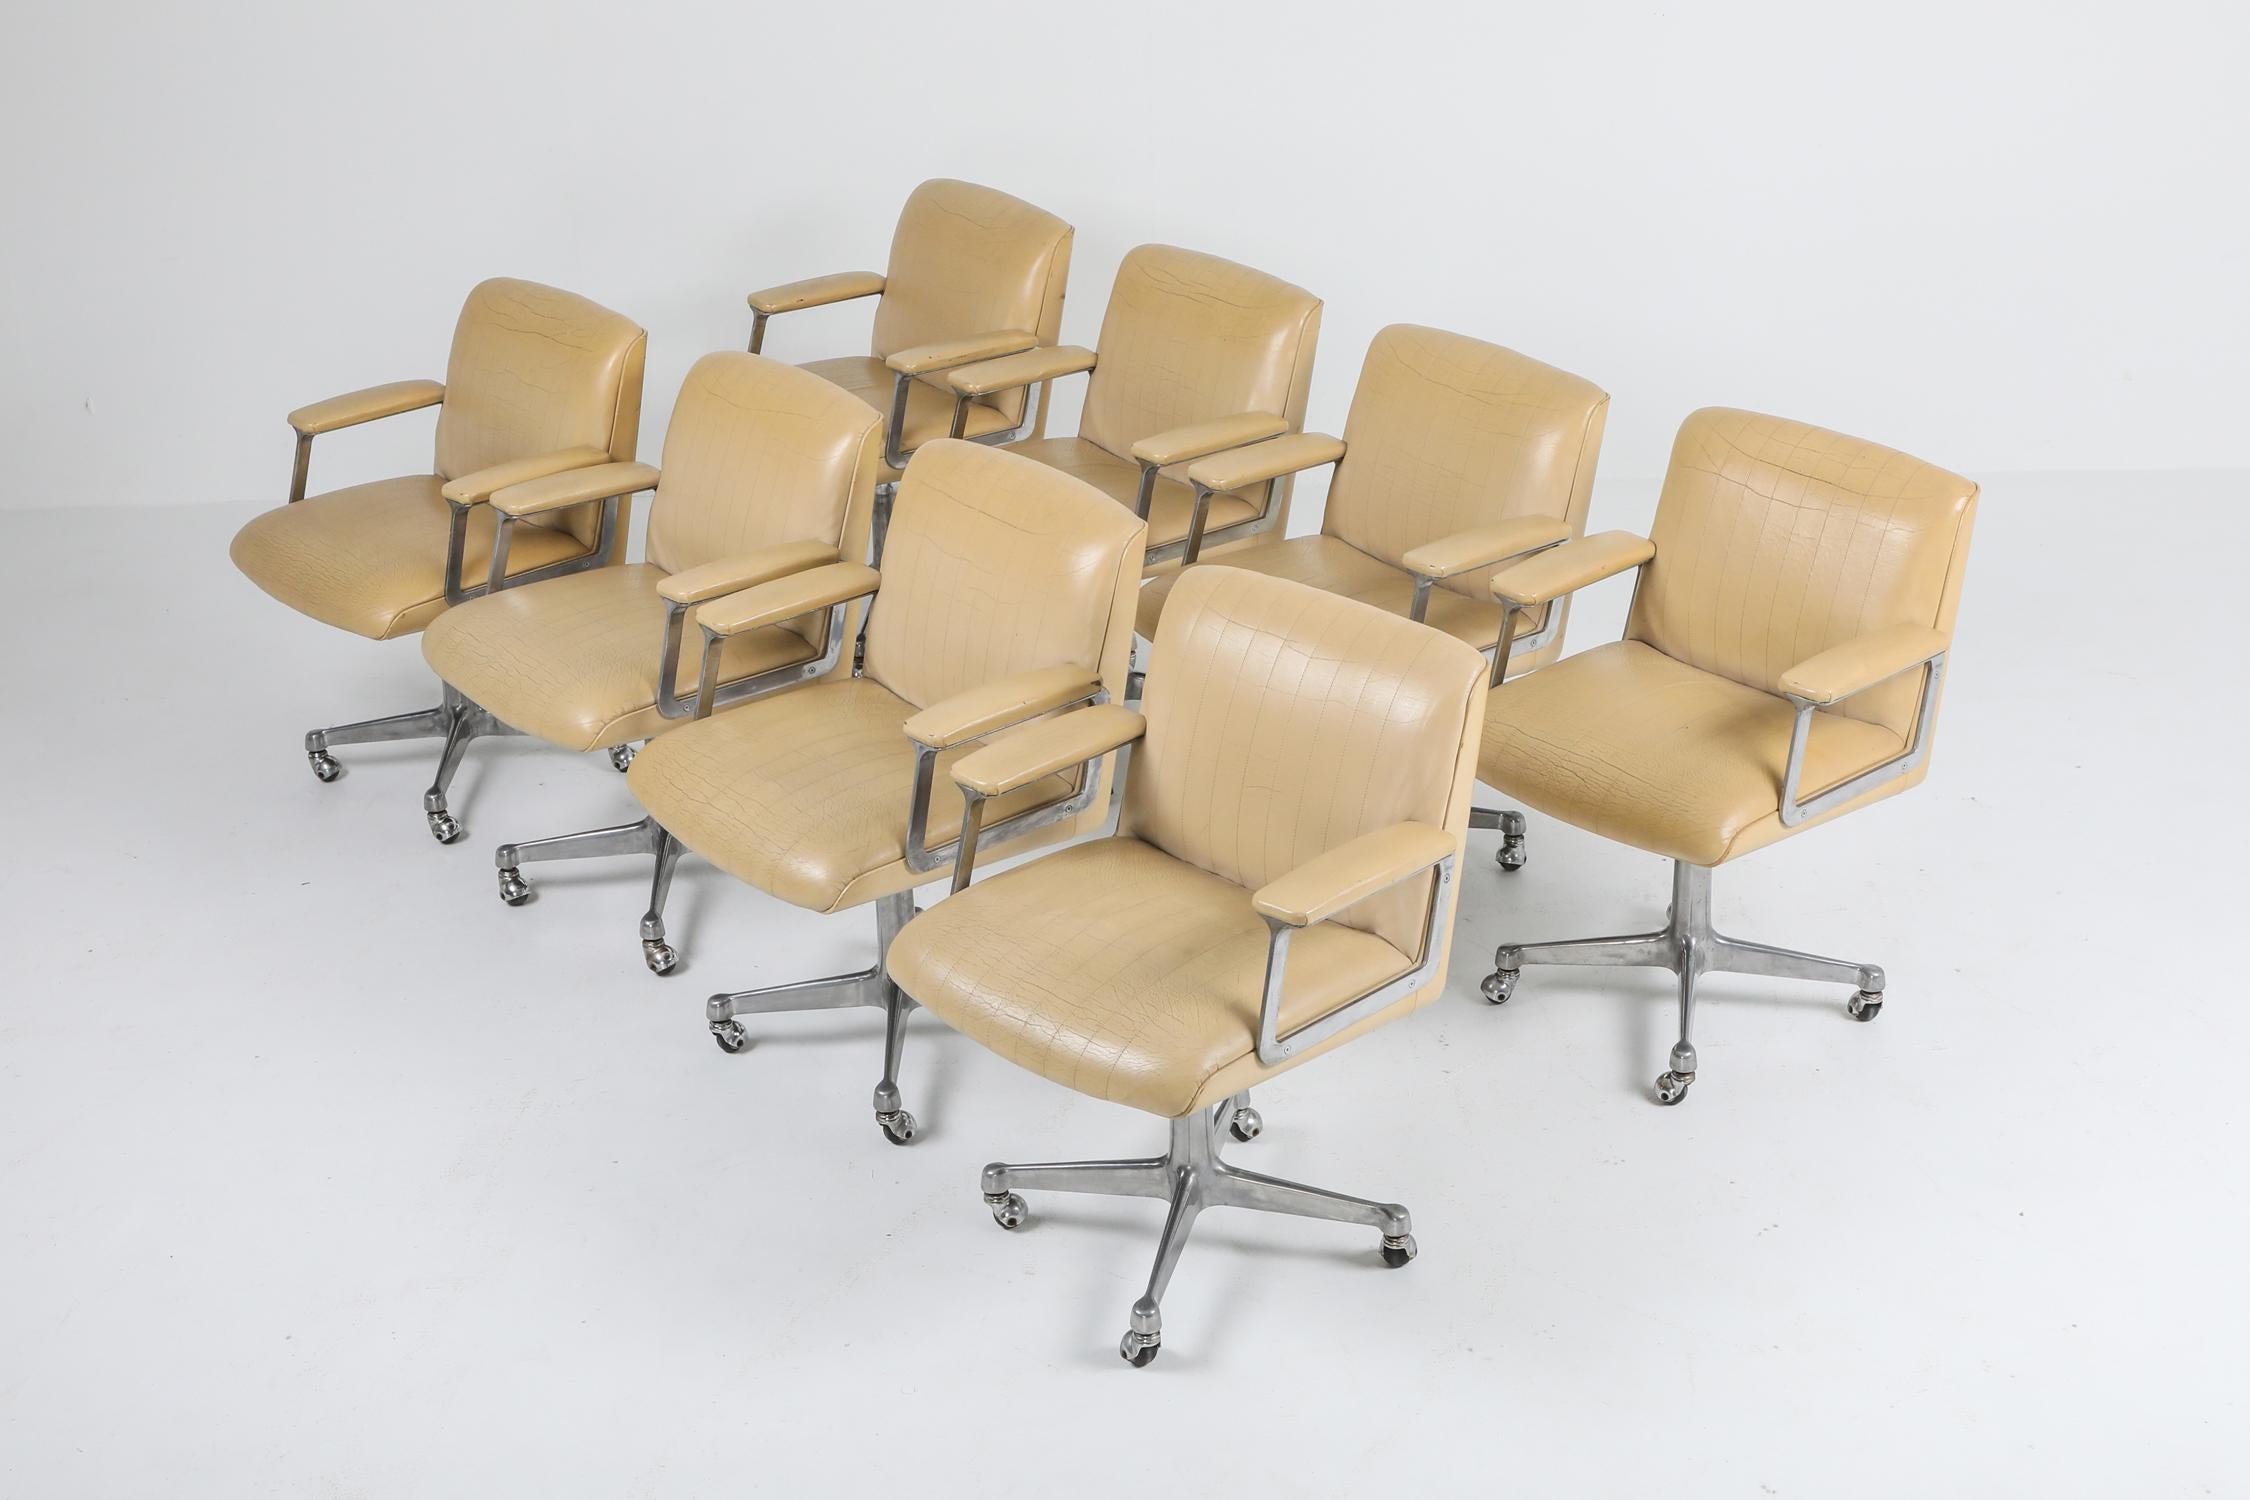 Borsani Osvaldo P126 swivel chairs, Tecno Italy, Mid-Century Modern, 1966, 8 chairs available

Camel leather swiveling armchairs by Osvaldo Borsani for Tecno 
Founder with his brother Fulgenzio of Tecno, the architect Osvaldo Borsani designed most